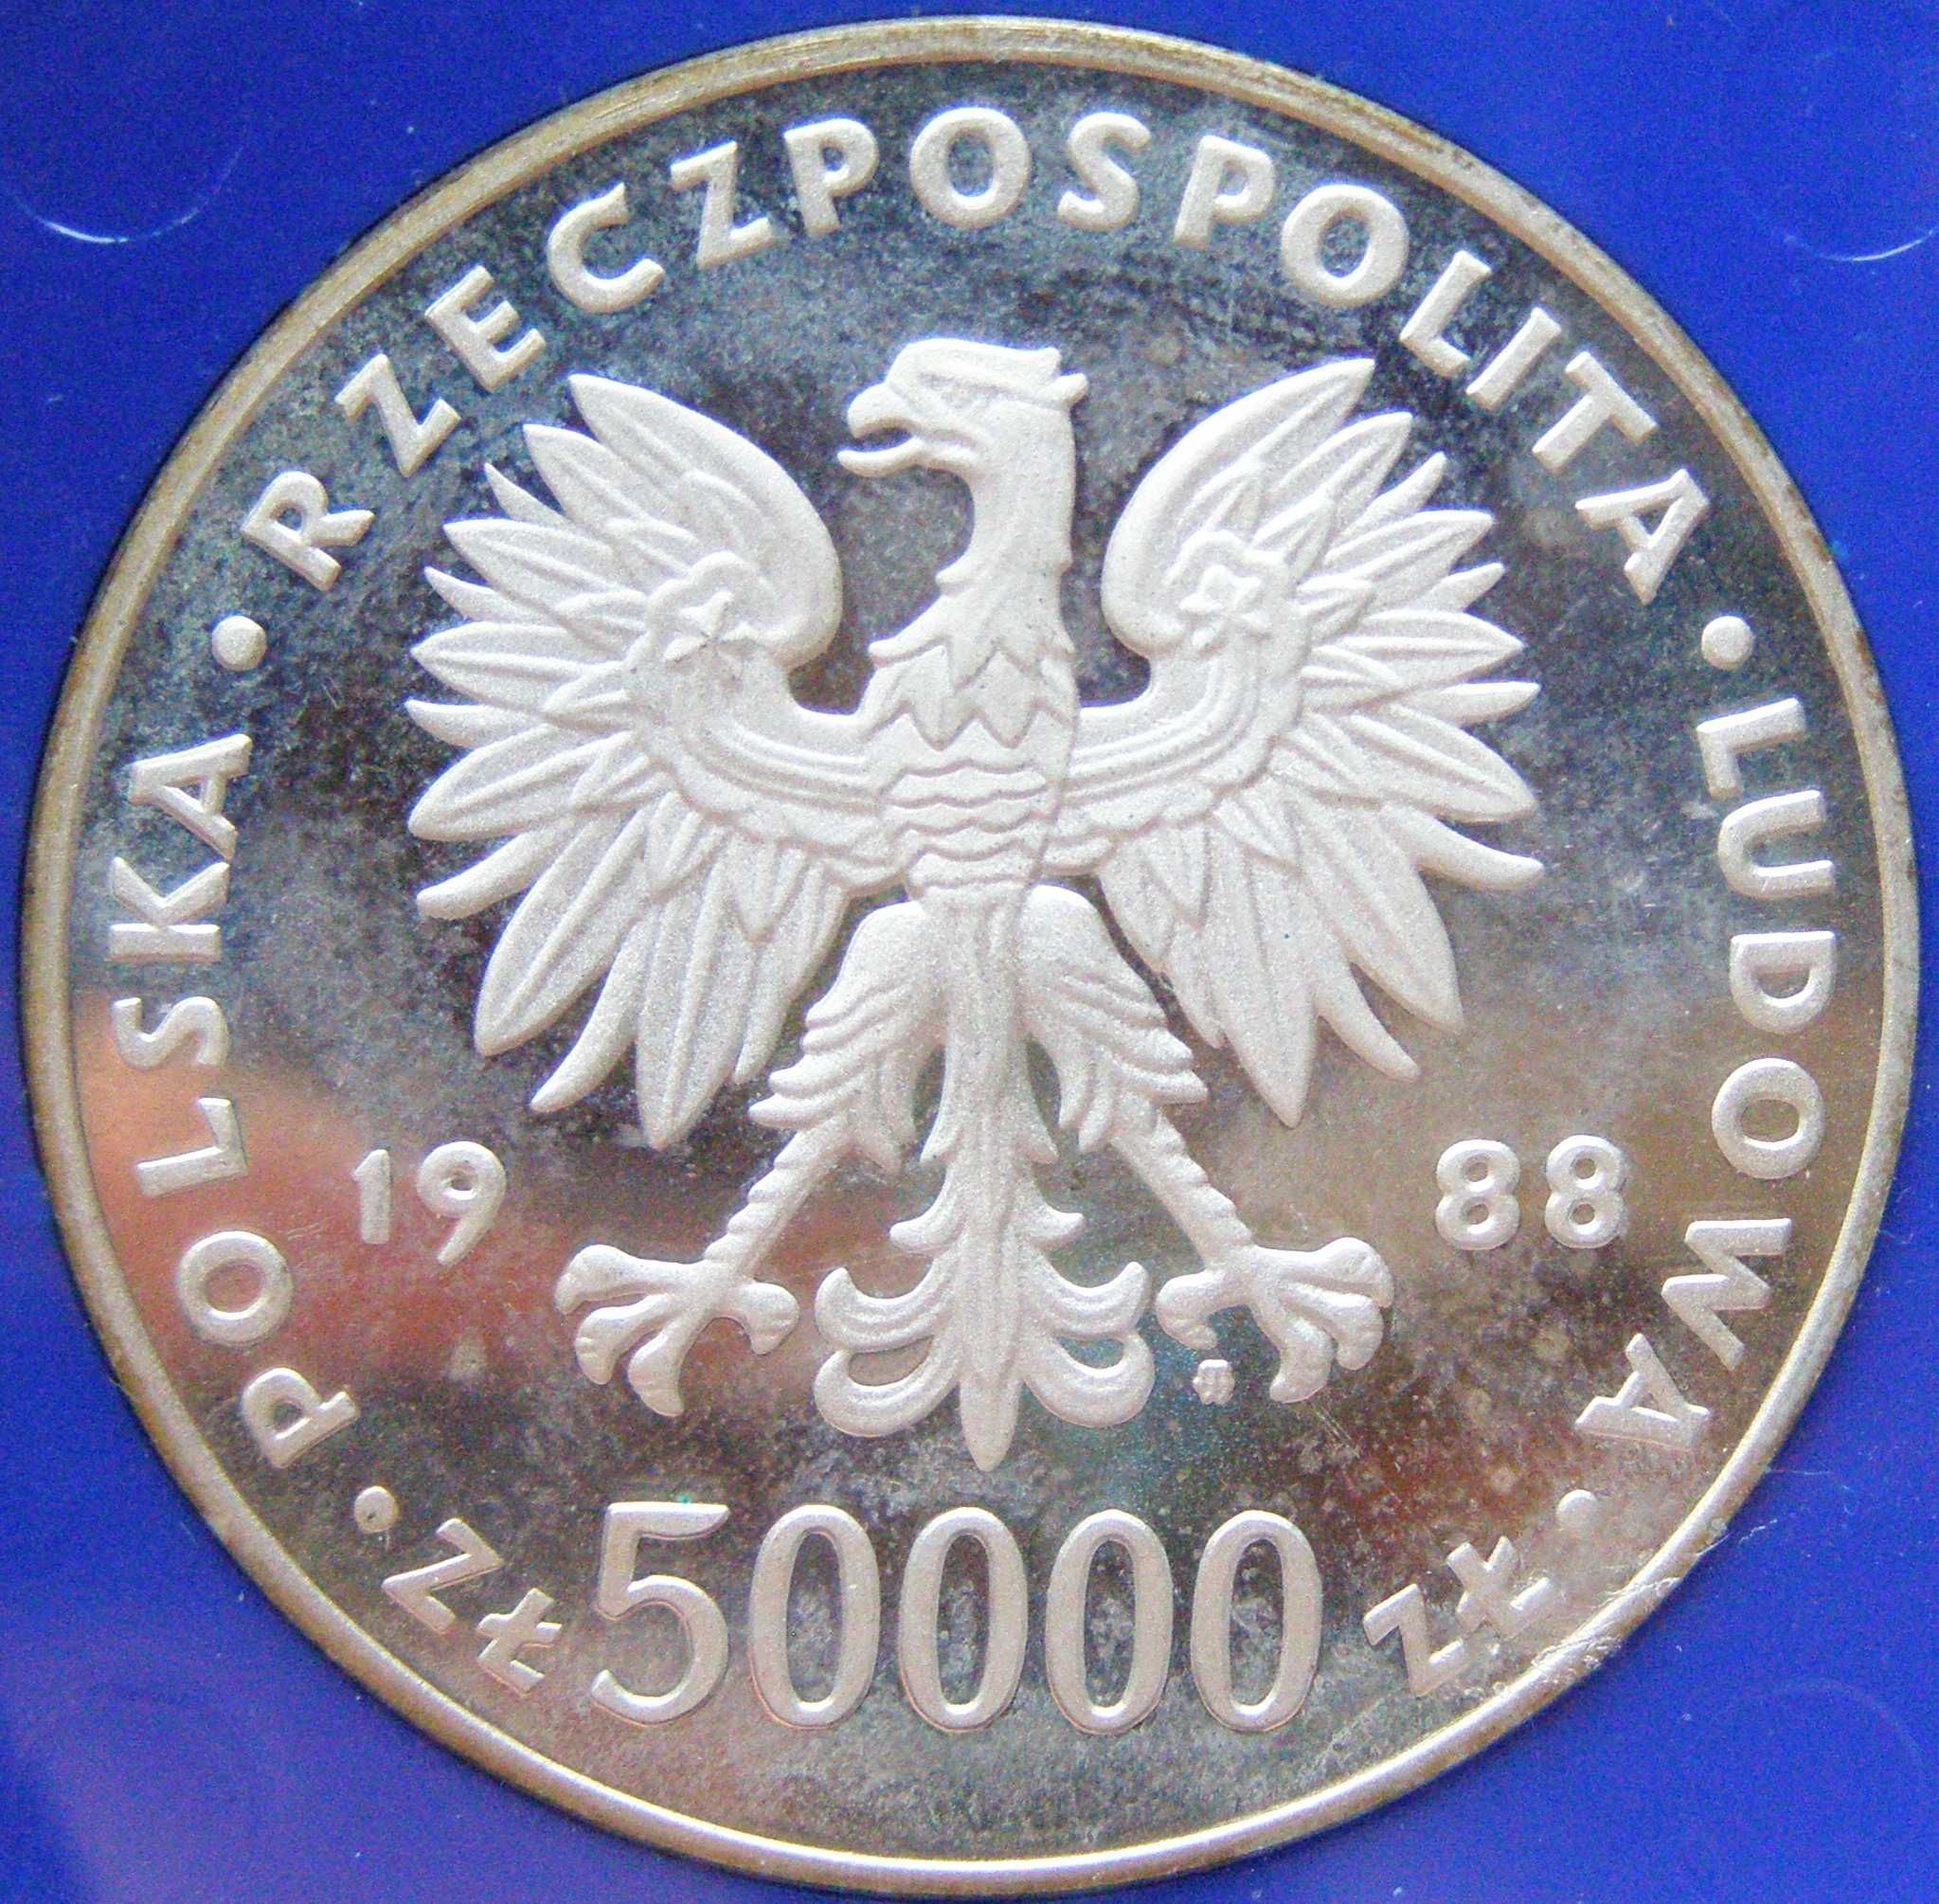 Moneta Polska 1993 r.1988 r.